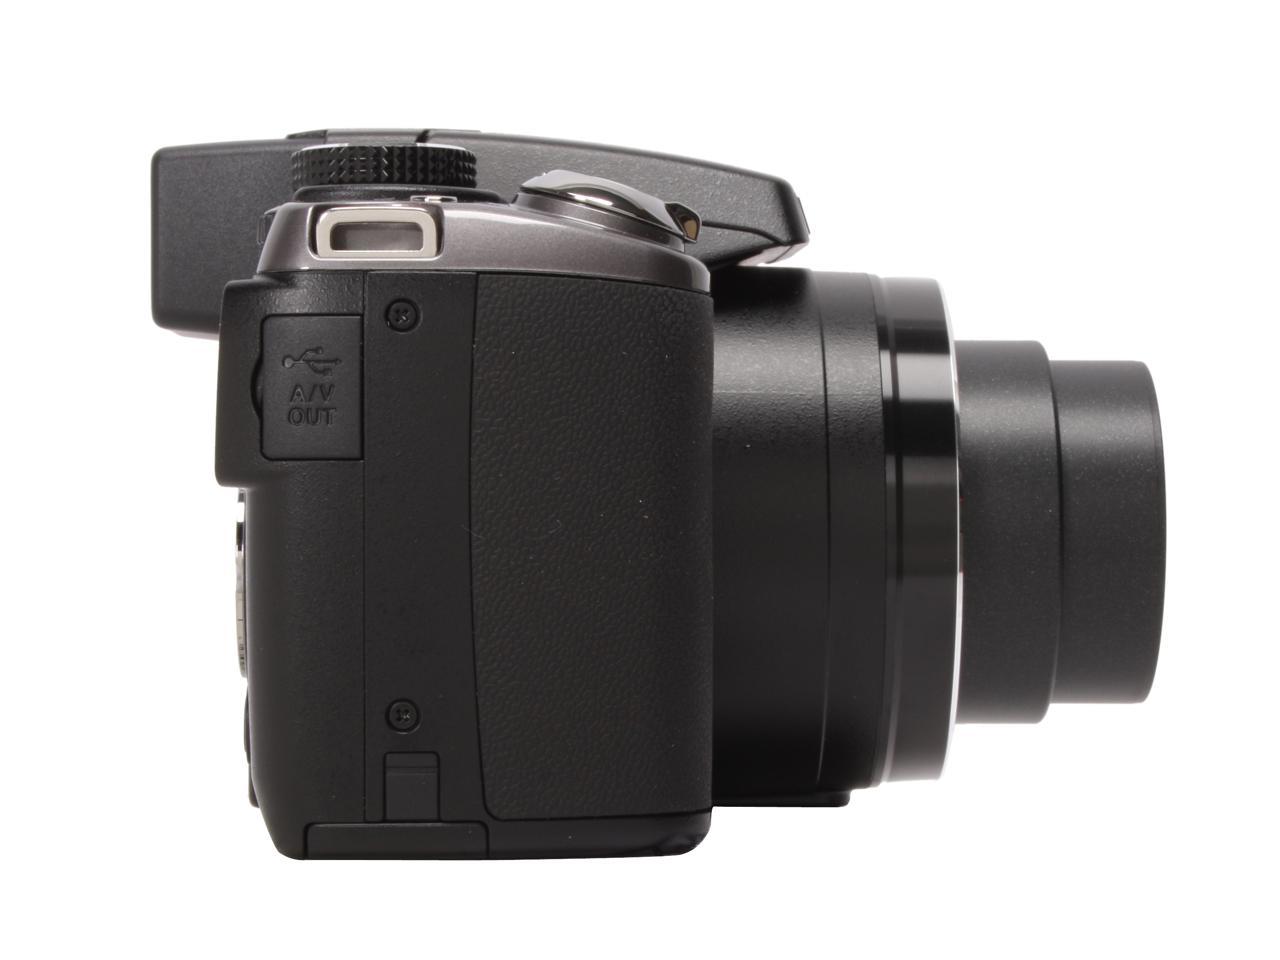 Nikon Coolpix P80 Black 101 Mp 27mm Wide Angle Digital Camera 